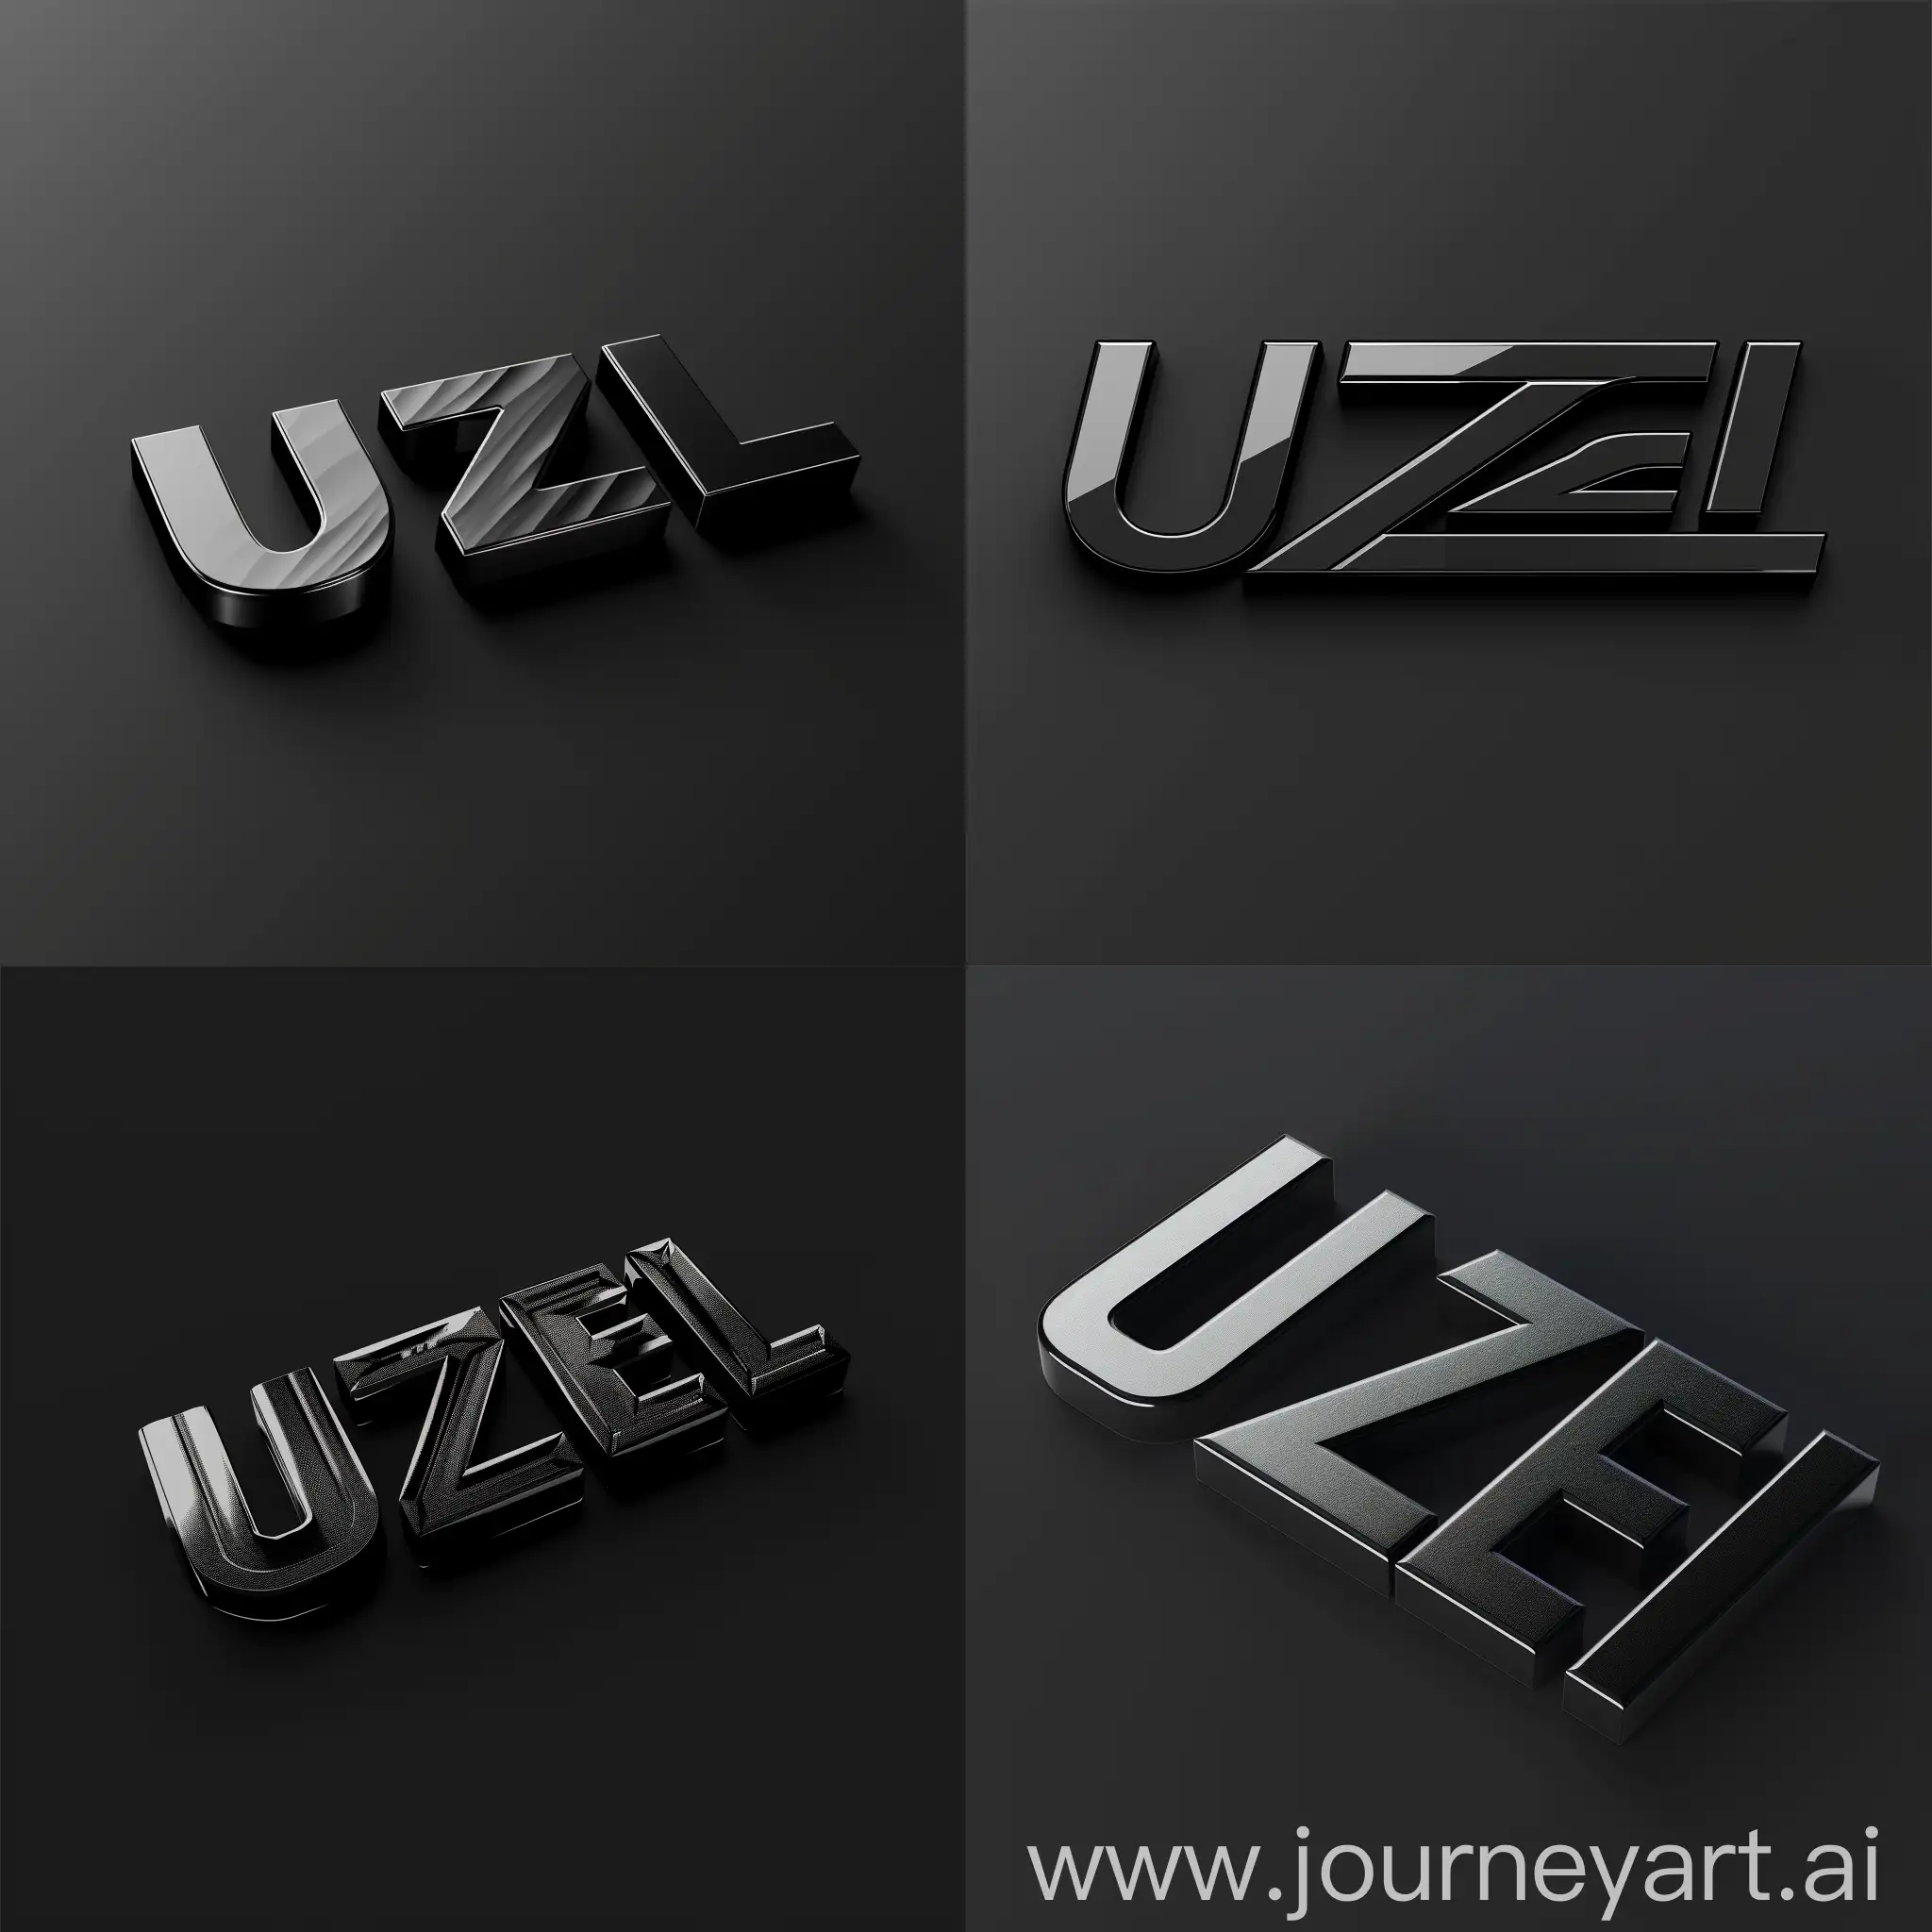 Sleek-and-Modern-3D-Logo-Design-for-UZEL-in-Two-Shades-of-Black